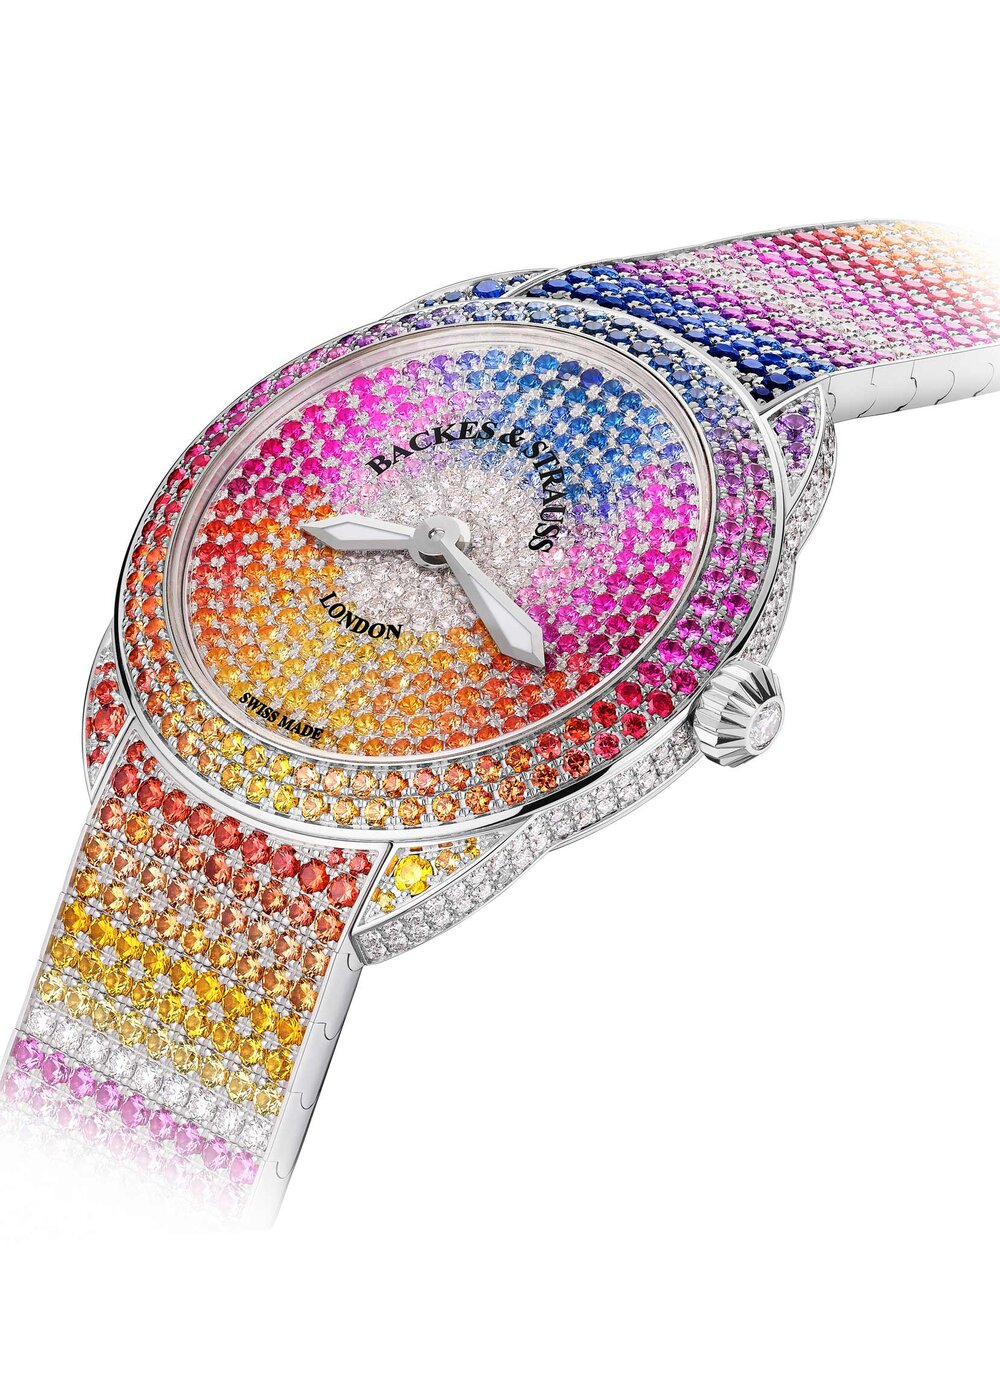 33 — Backes & - Luxury Diamond Watches